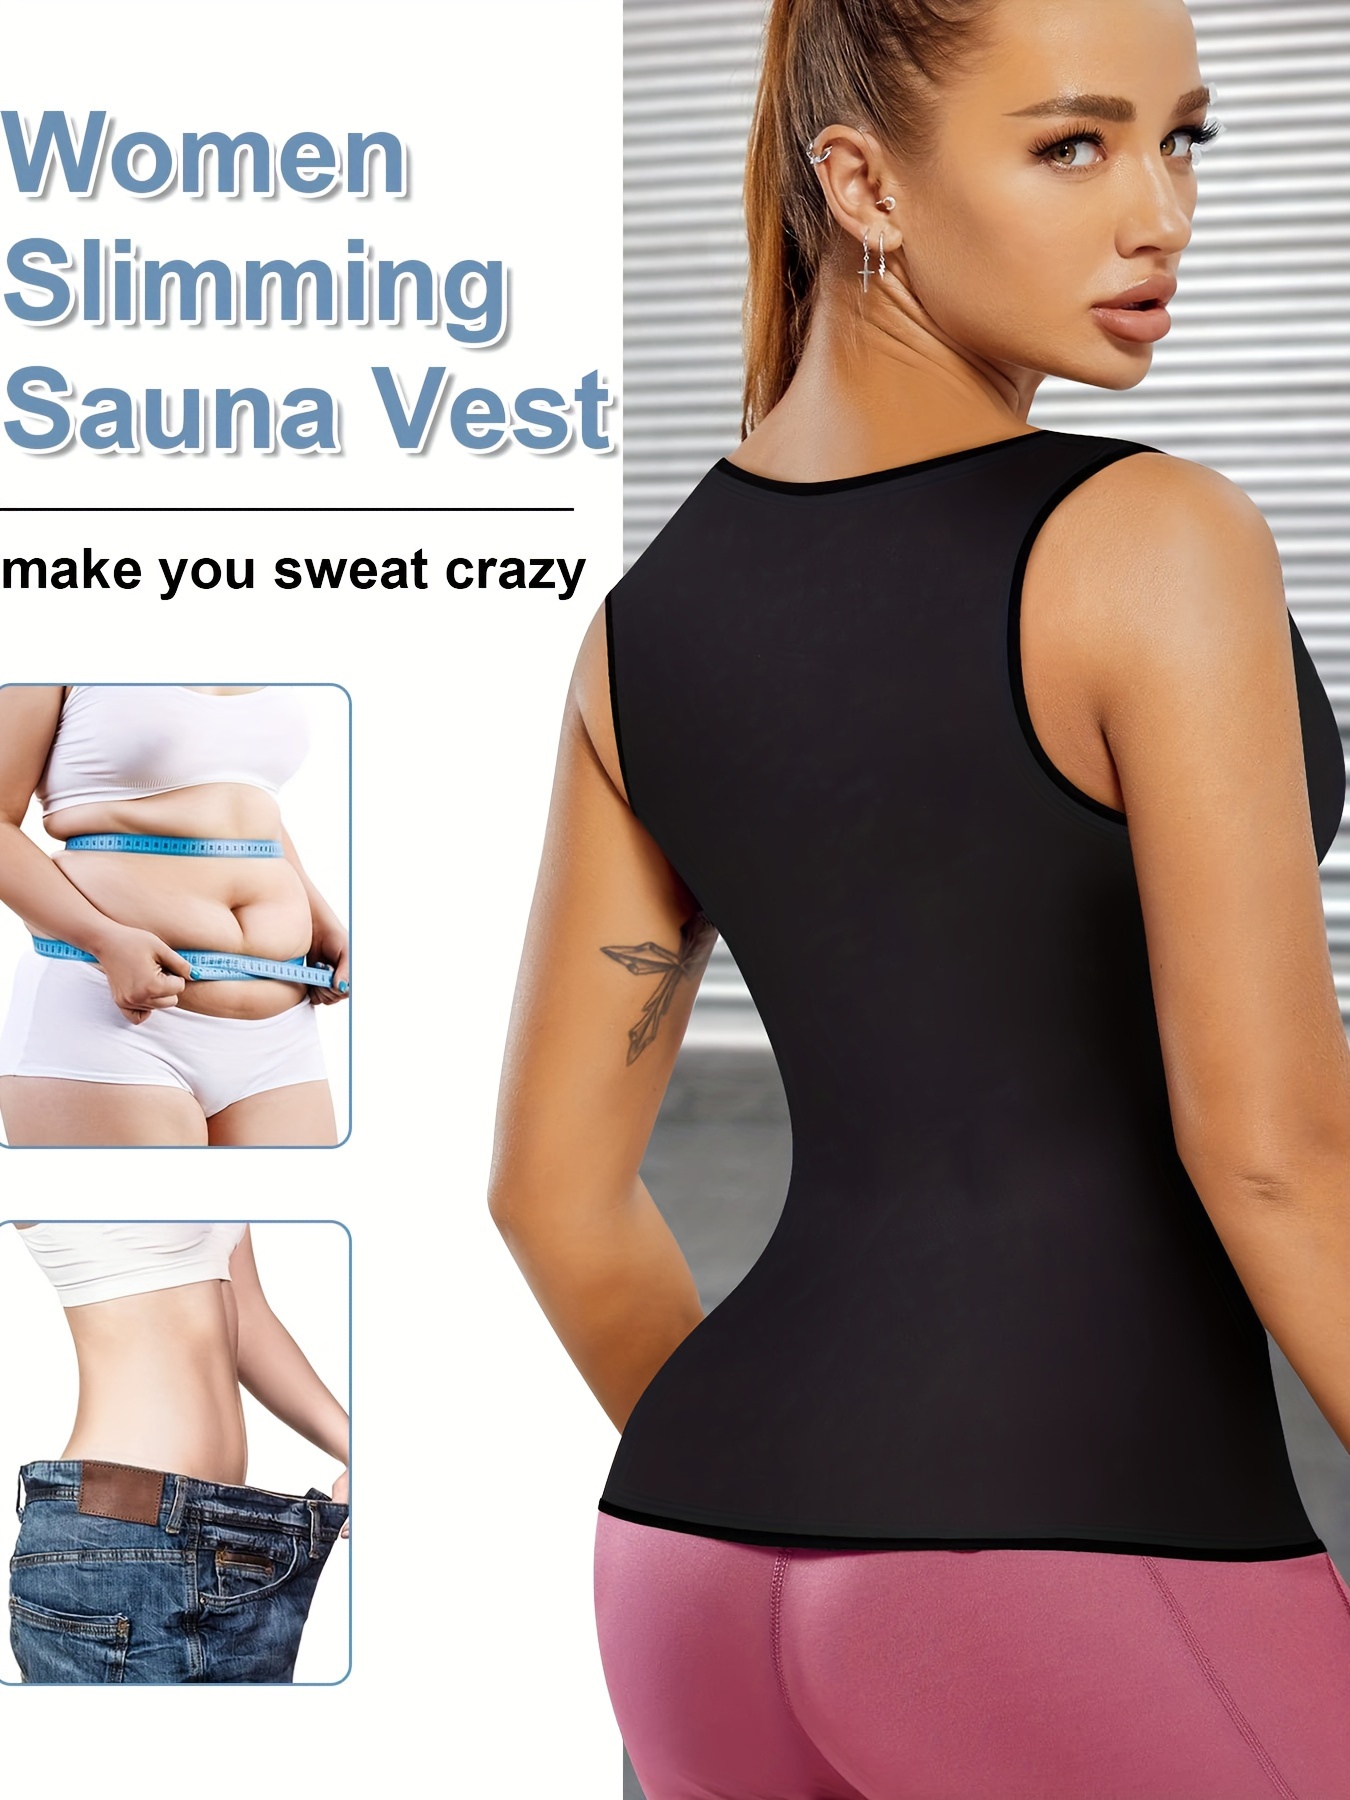 Women Slimming Sweat Sauna Vest Tank Top Workout Body Shaper Weight Loss  Jacket